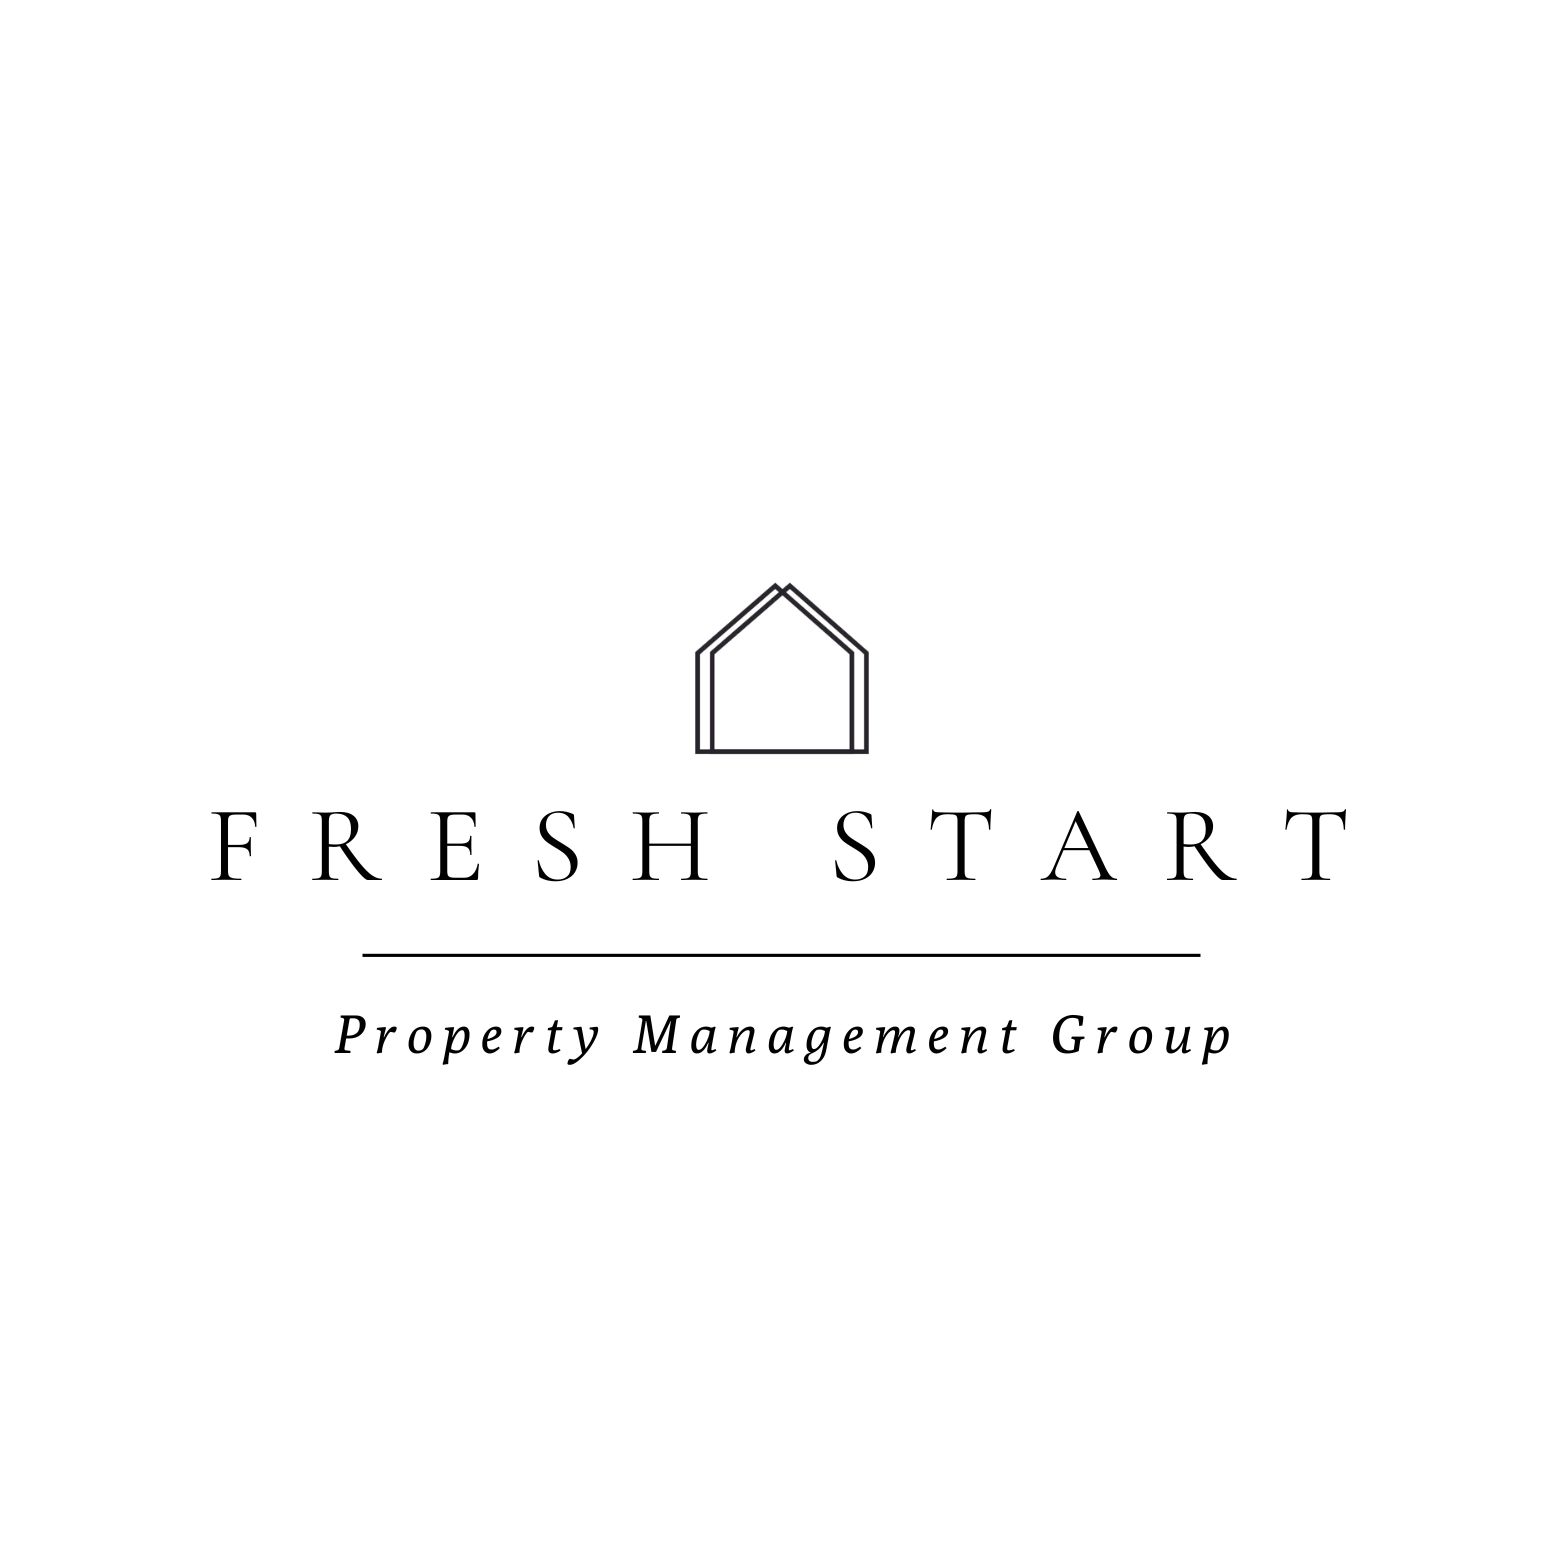 Fresh Start Property Management Group logo